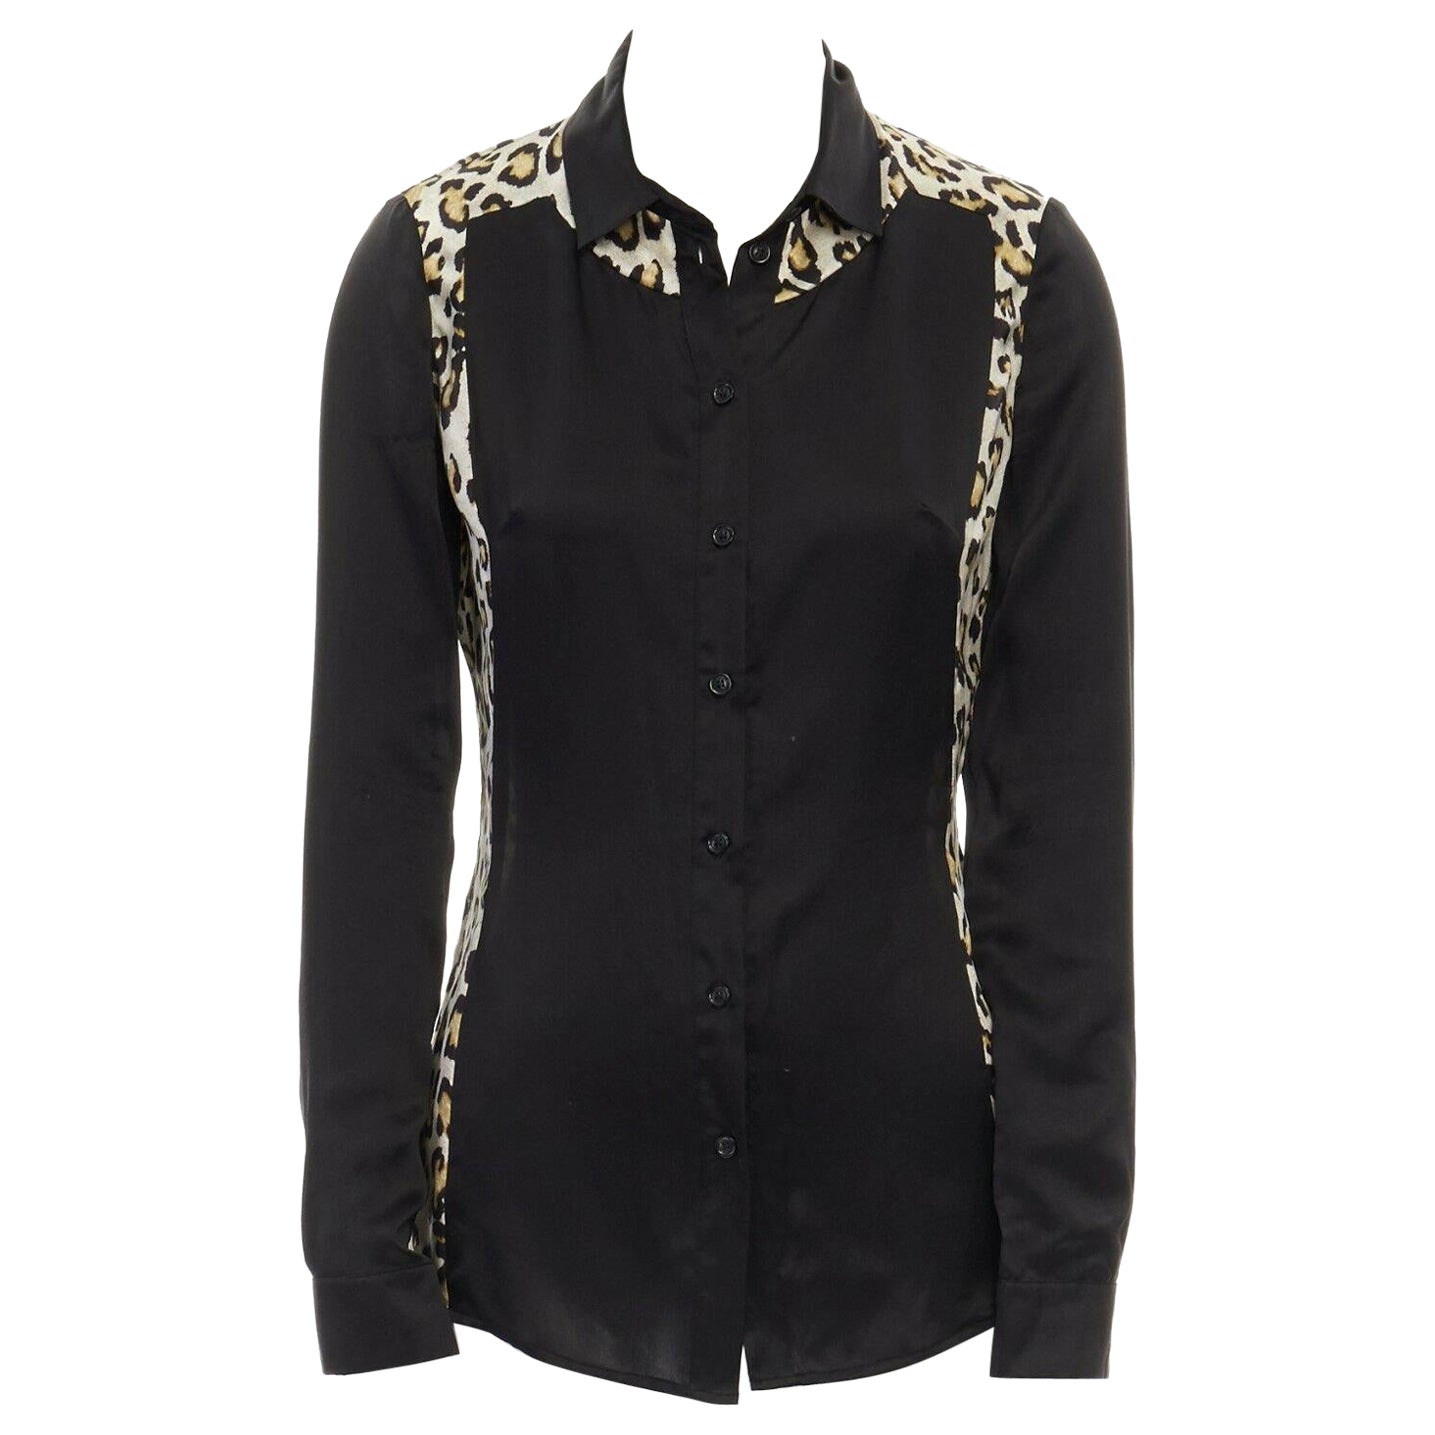 JUST CAVALLI 100% silk black leopard colorblocked button front shirt IT40 S